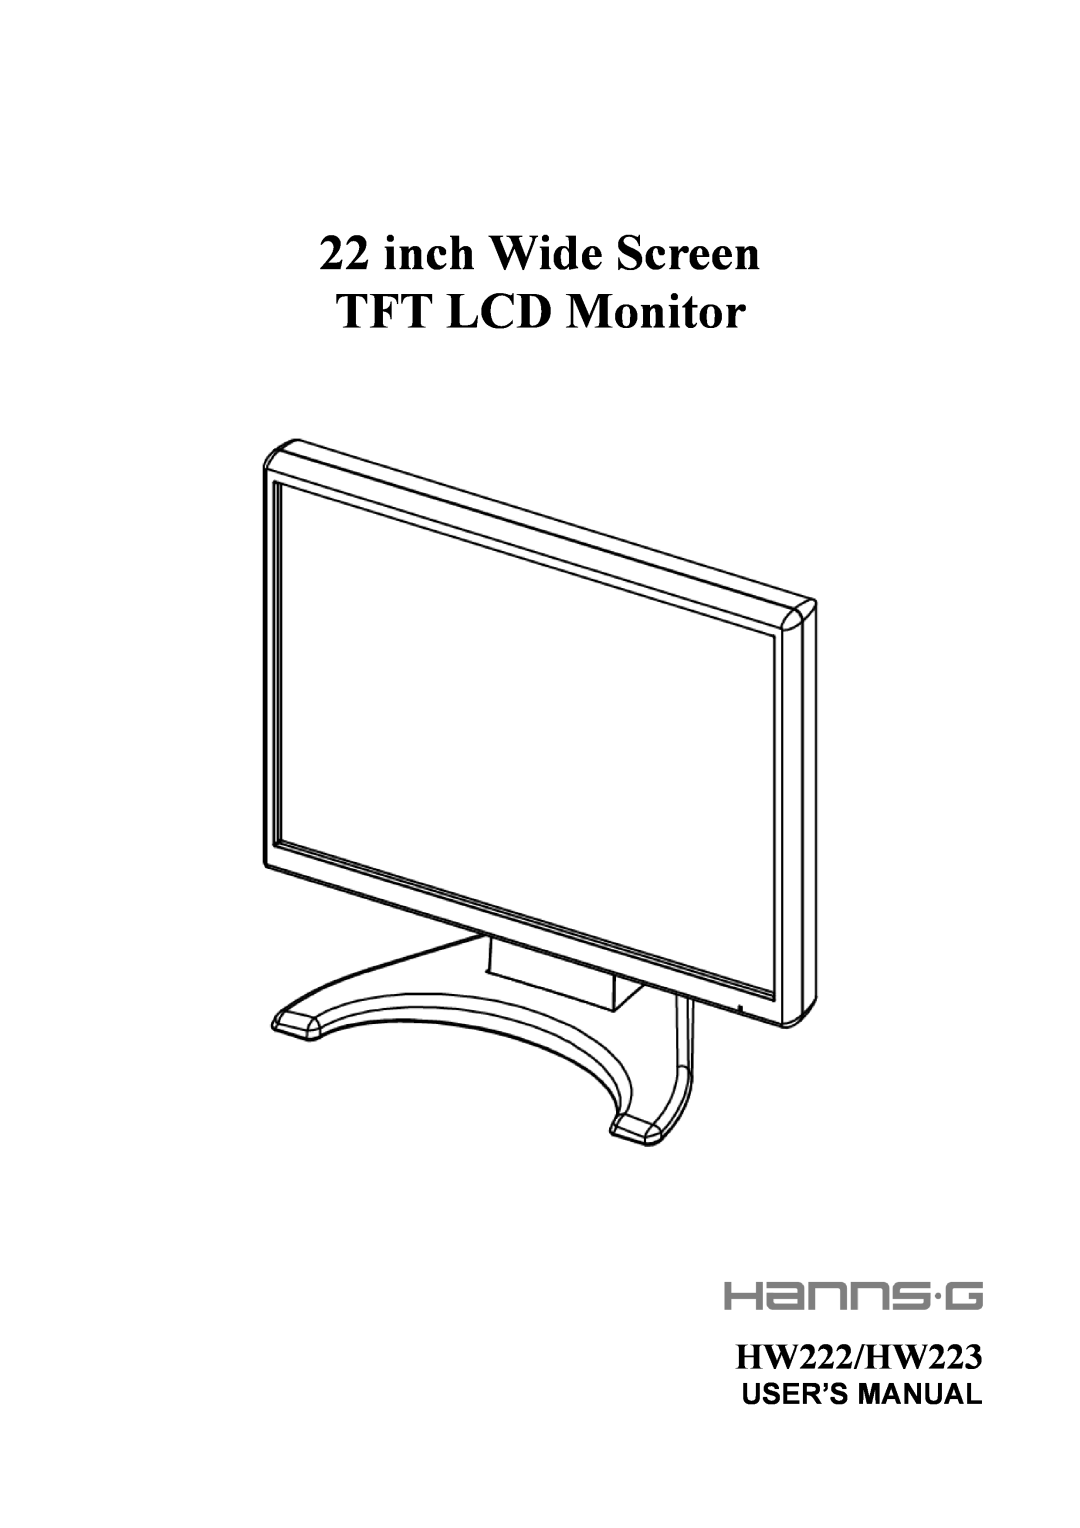 Hanns.G user manual inch Wide Screen TFT LCD Monitor, HW222/HW223 